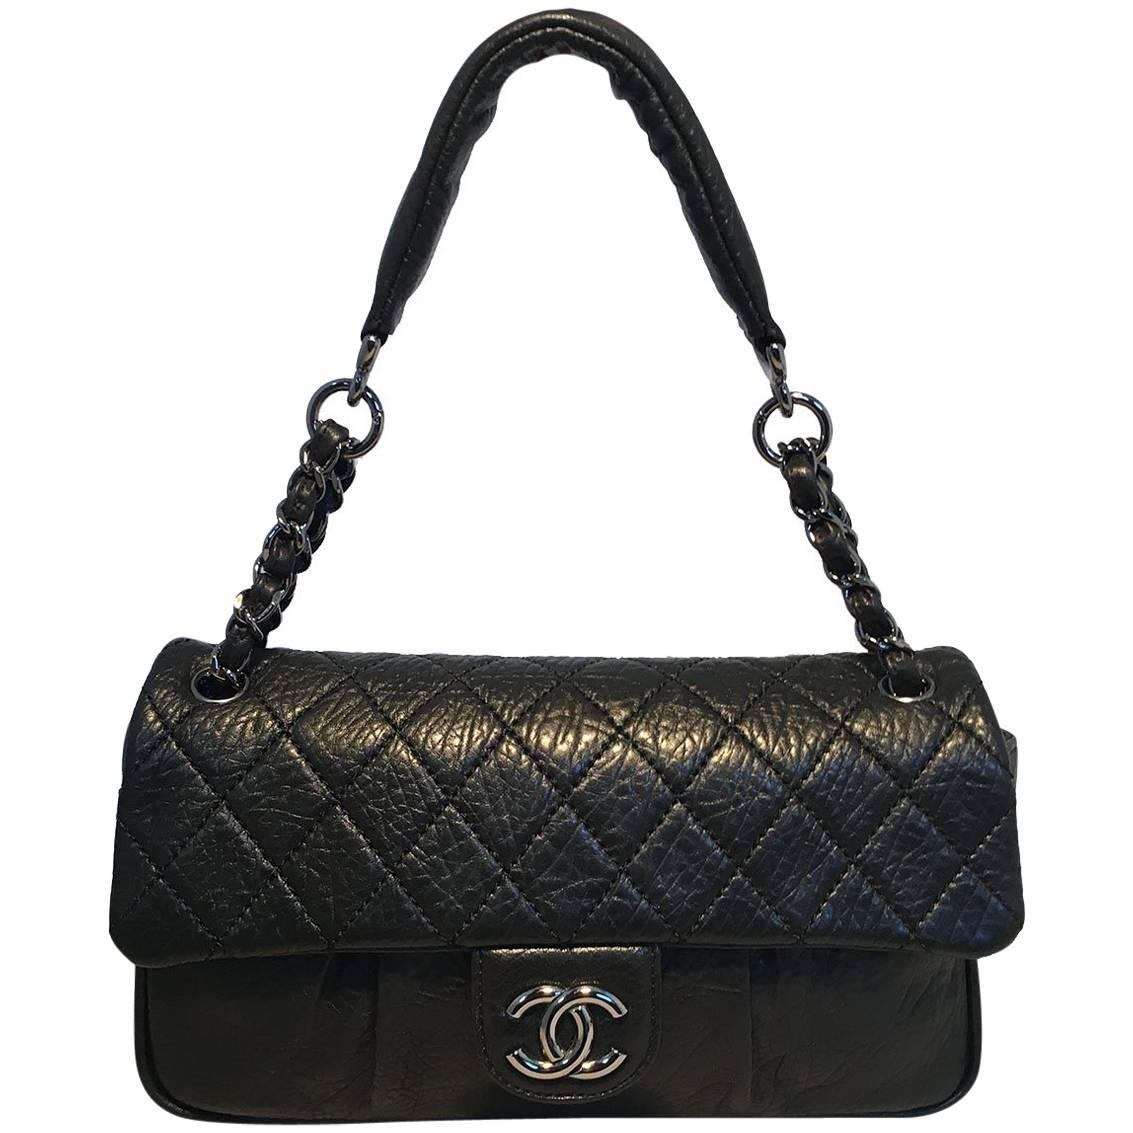 Chanel Black Textured Quilted Calfskin Classic Flap Shoulder Bag